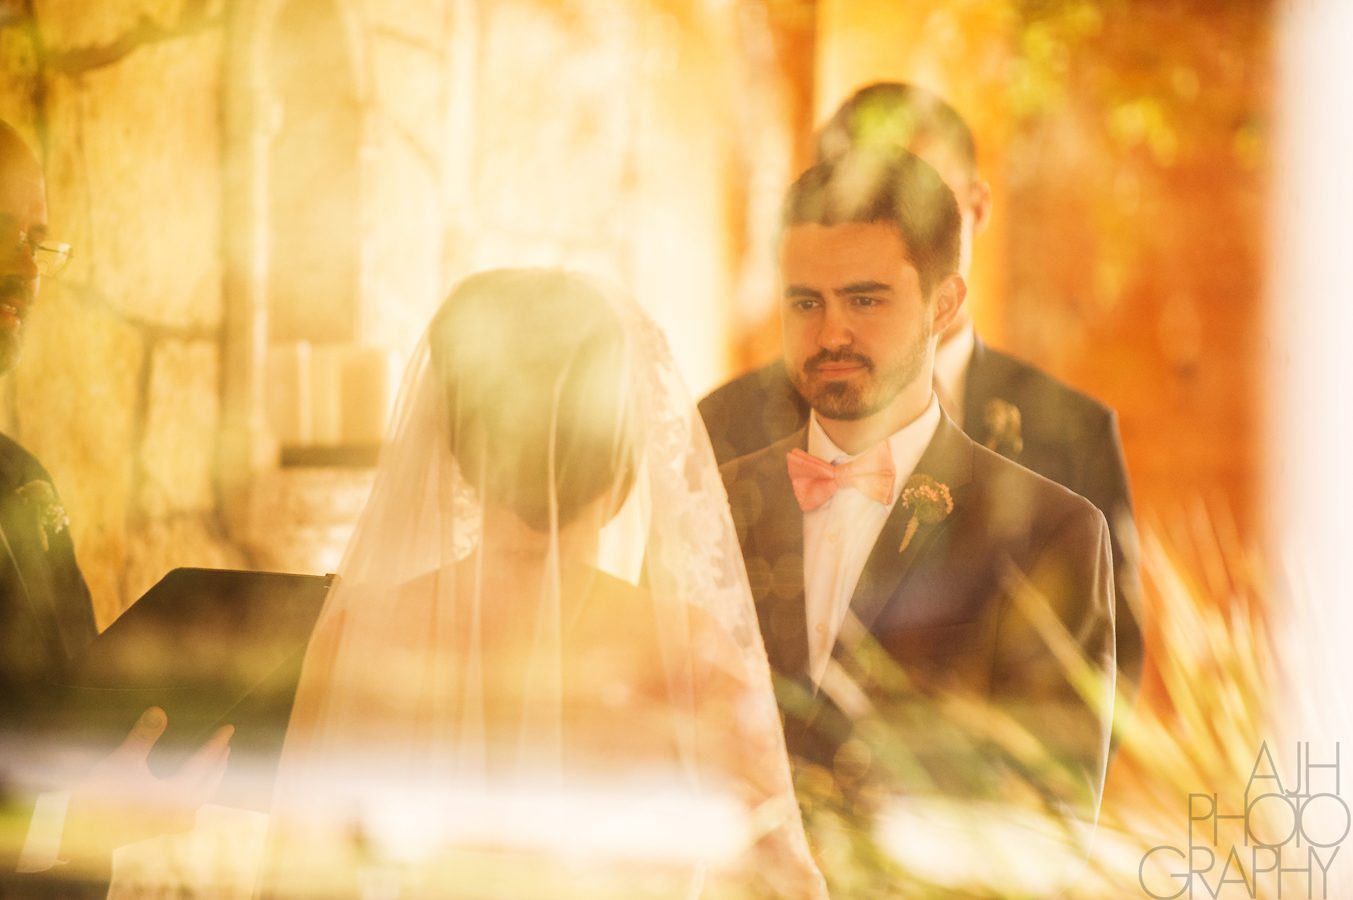 La Hacienda Wedding Photography - AJH Photography